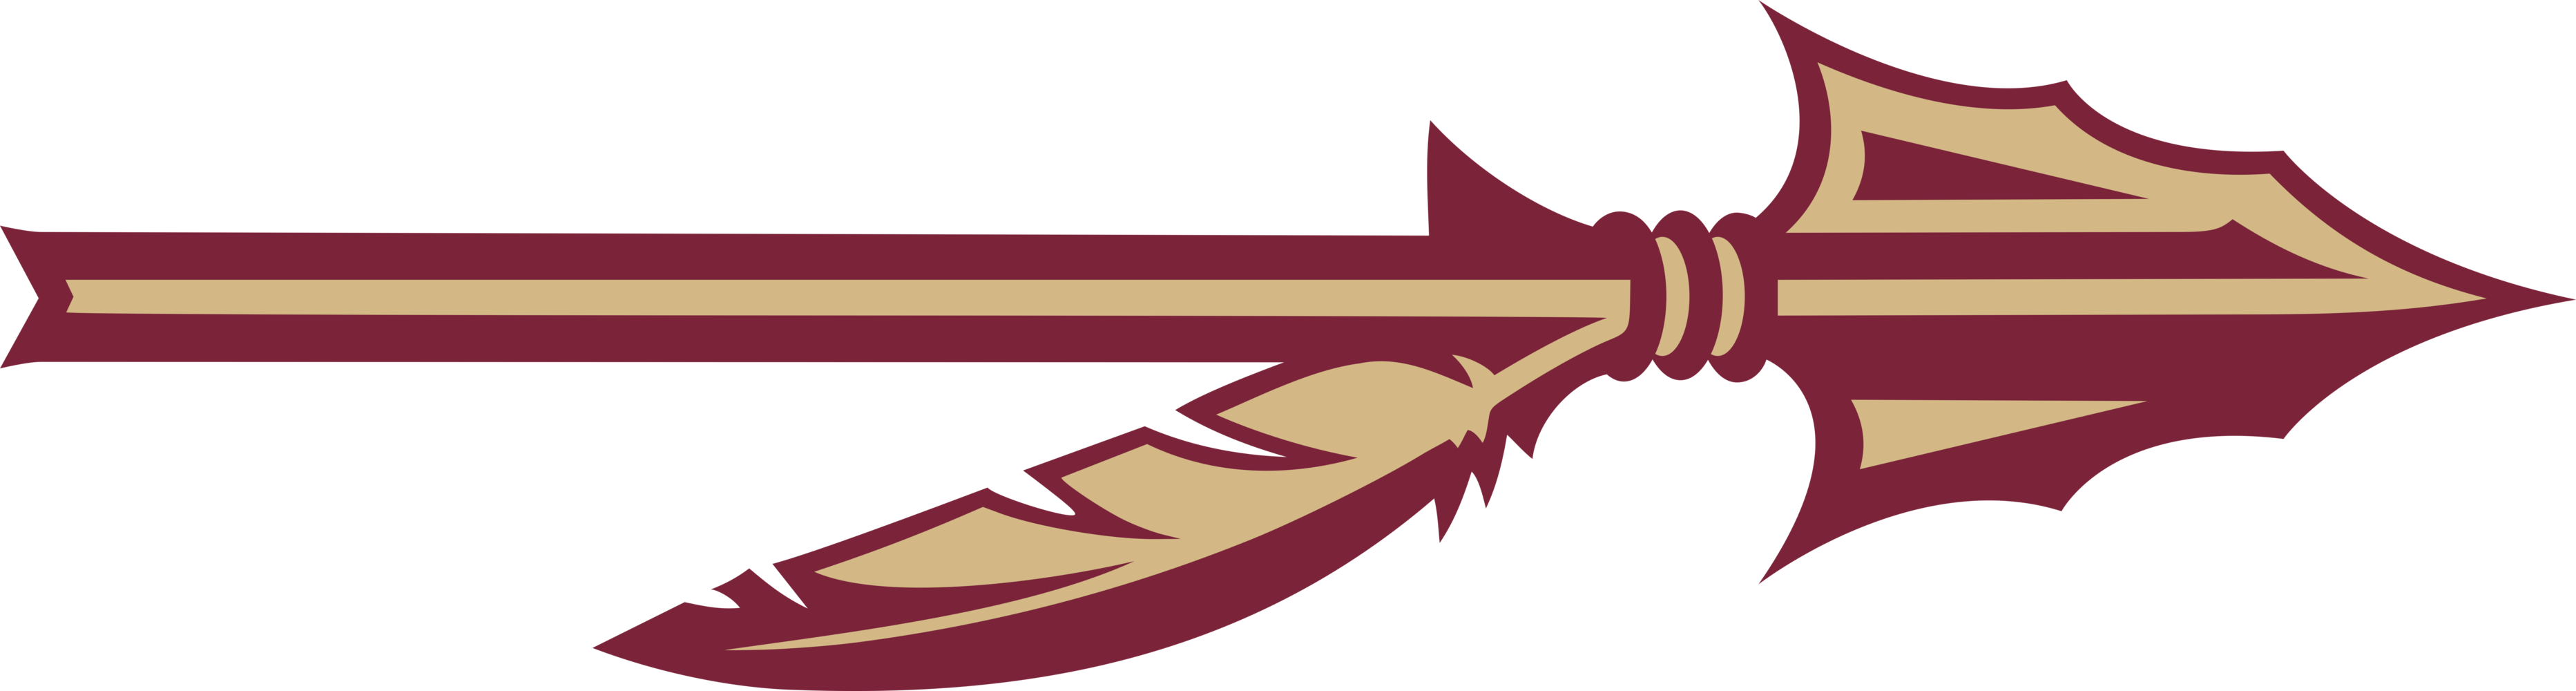 Florida State Arrow Logo - Florida State Seminoles | Team Logos | Florida state seminoles ...